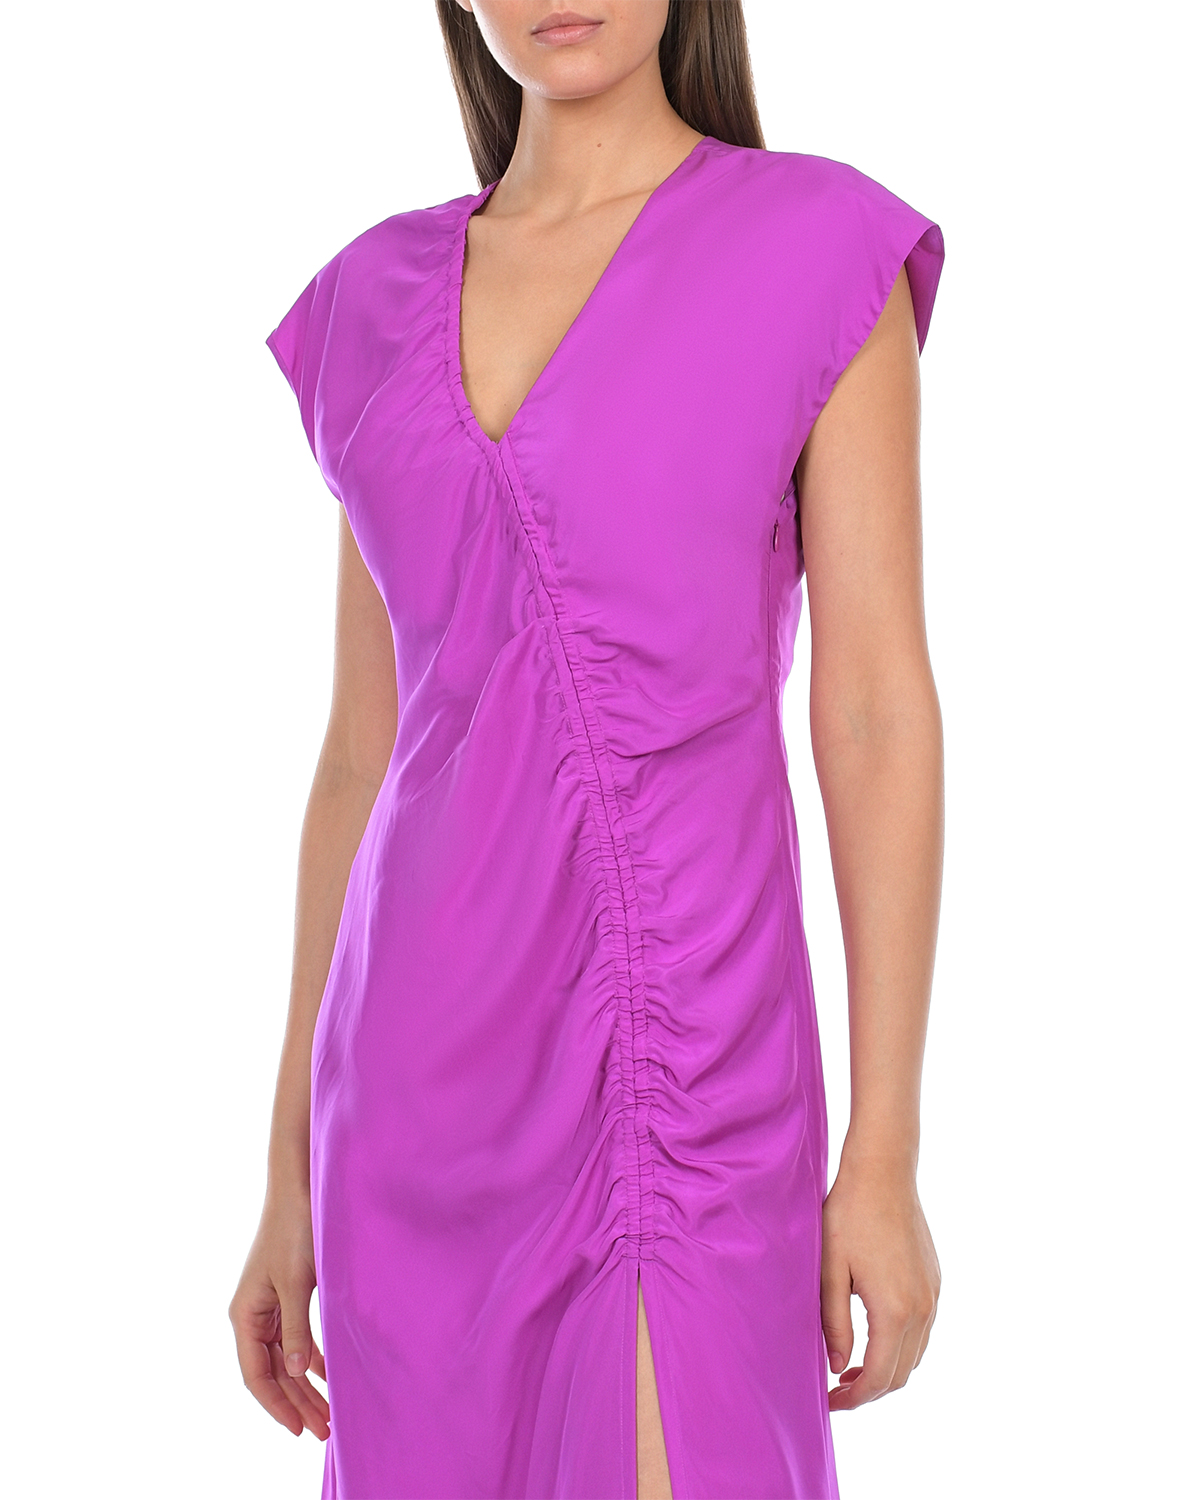 Шелковое платье цвета фуксии ROHE, размер 42 - фото 6